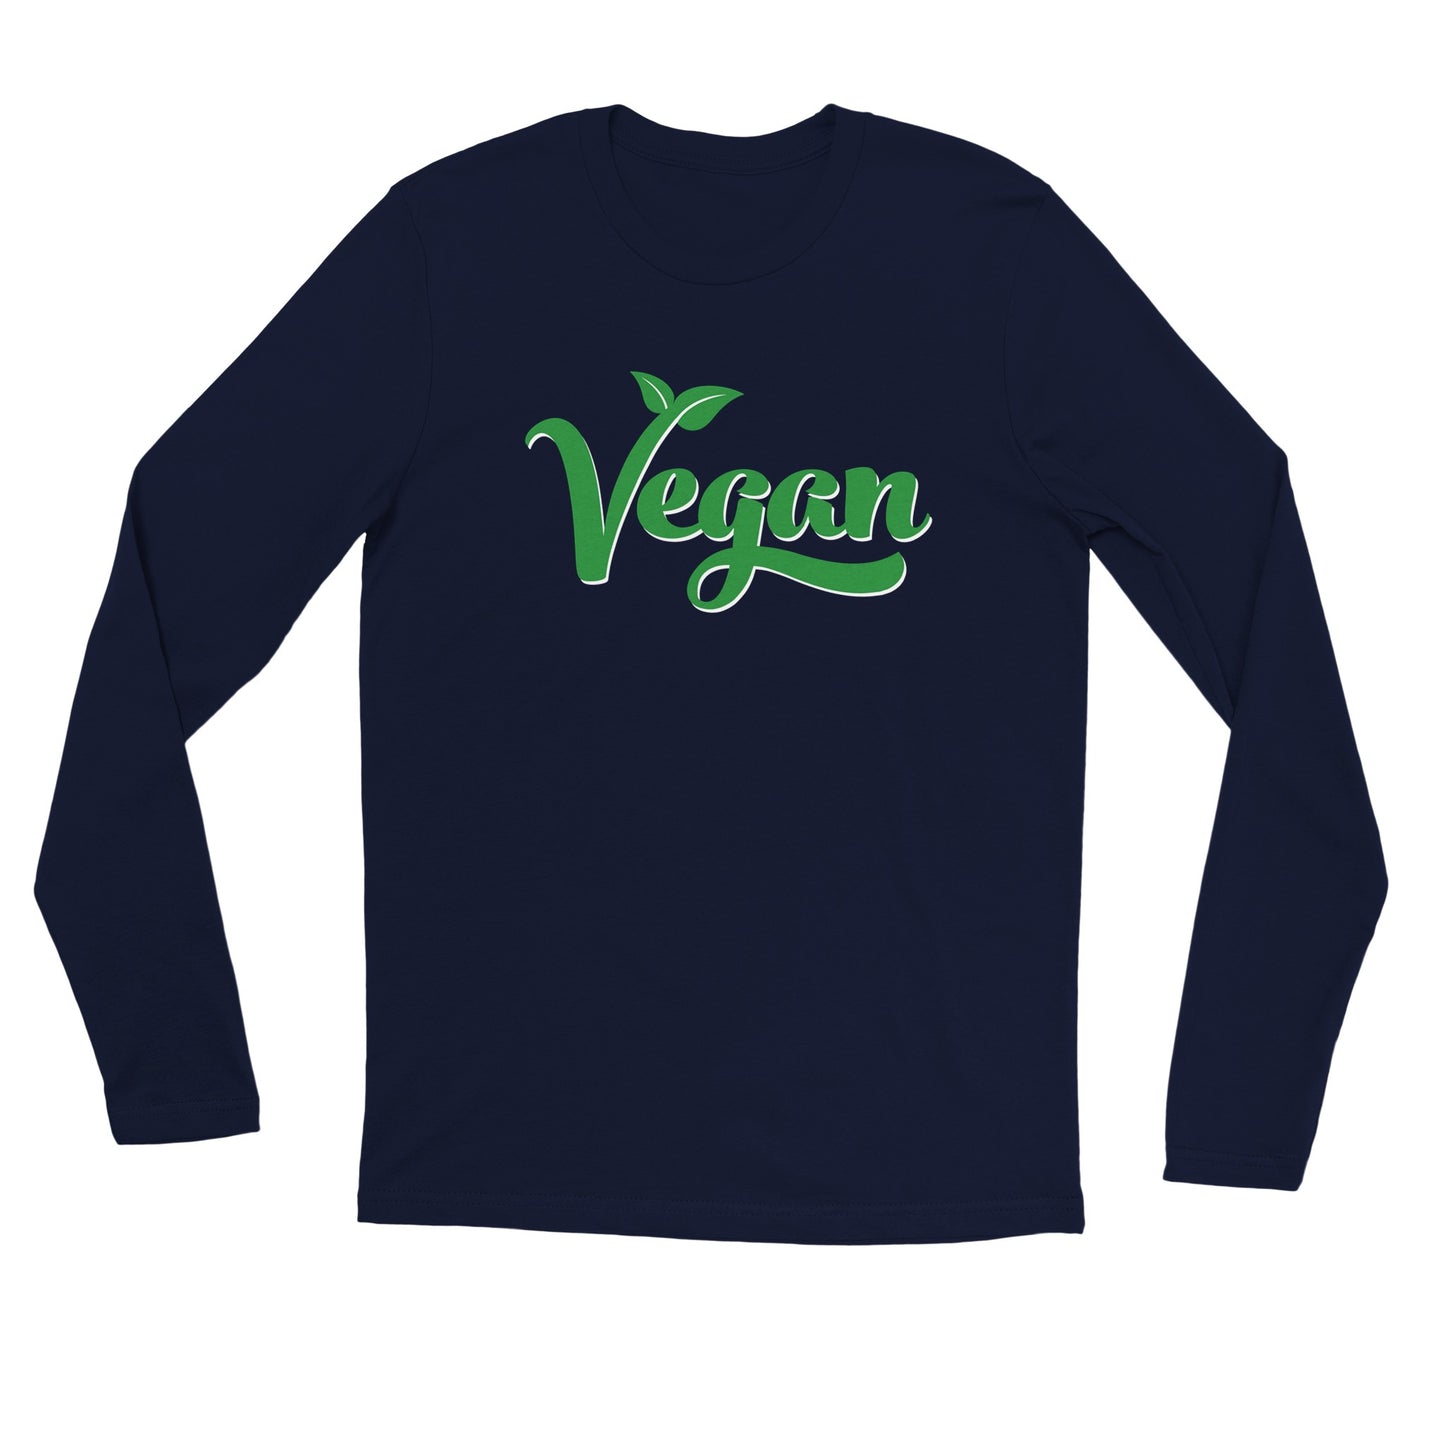 Vegan - Unisex Longsleeve T-shirt